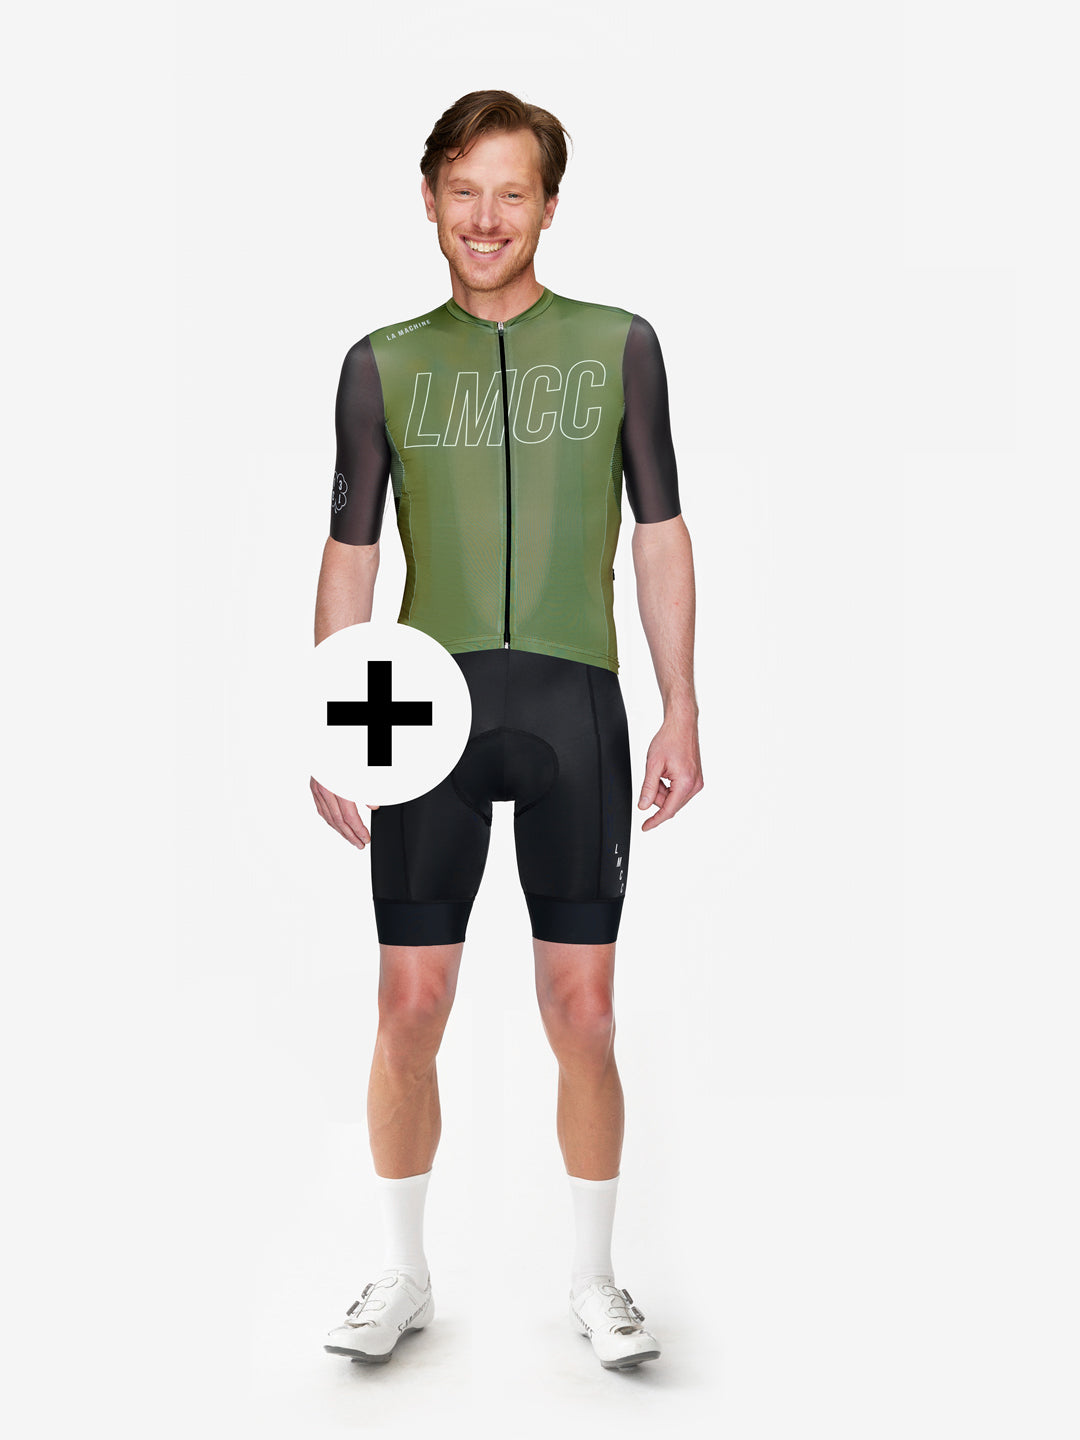 LMCC - Cycling Jersey - Sage Green + Bib Shorts - Bundle